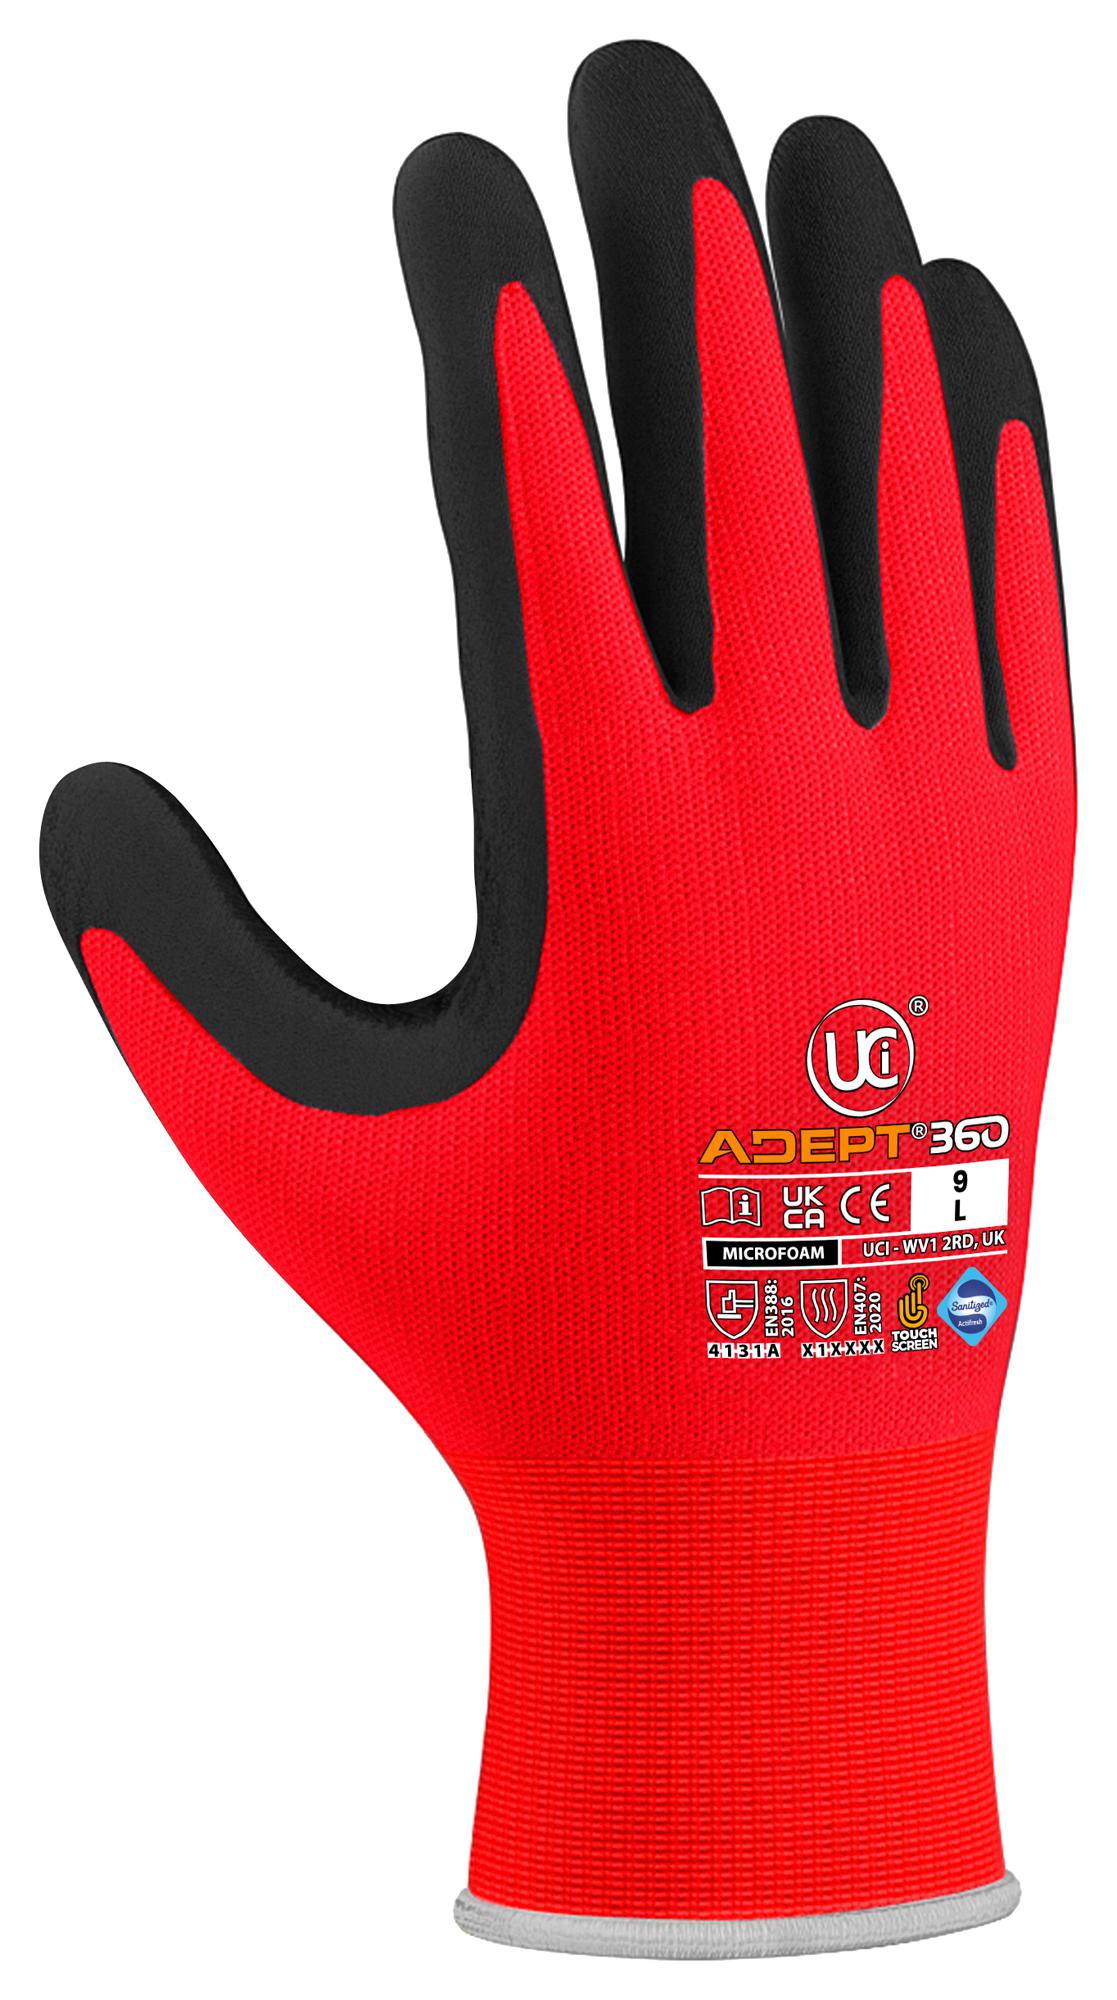 Uci G/adept360-Red/07 Gloves, Nylon/spandex, Red, S